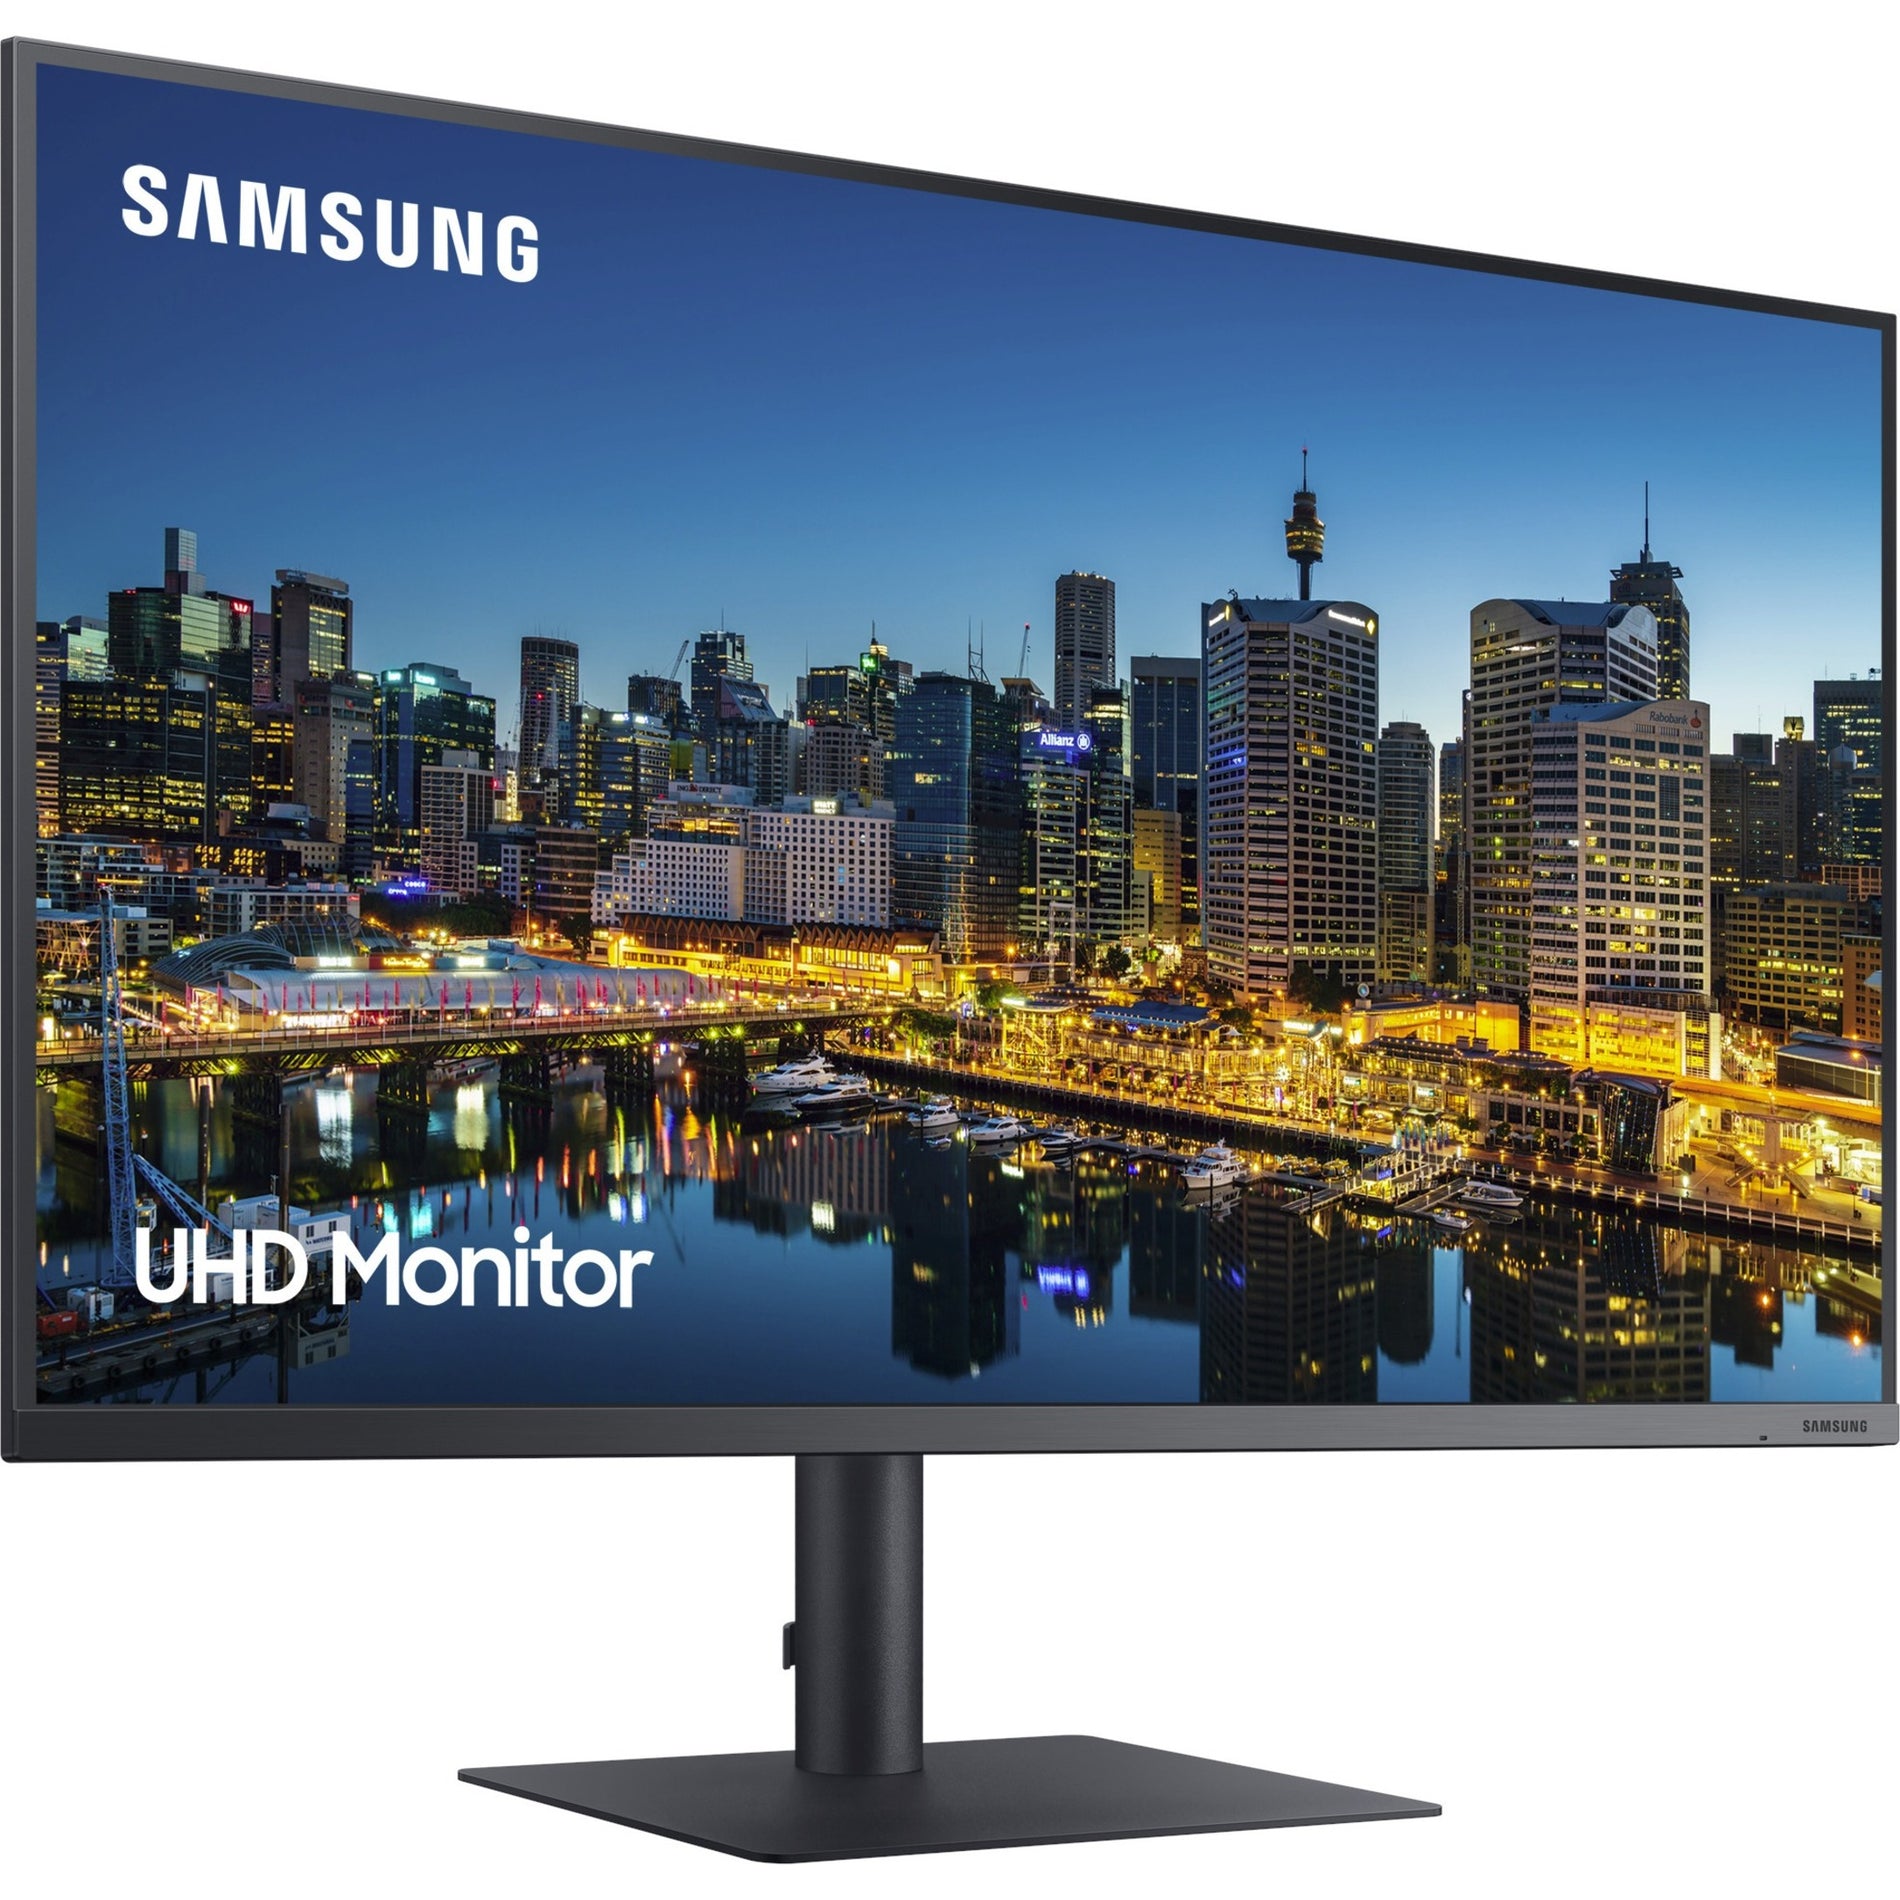 Samsung F32TU874VN TU874 Series 32" 4K UHD LCD Monitor - Dark Blue Gray